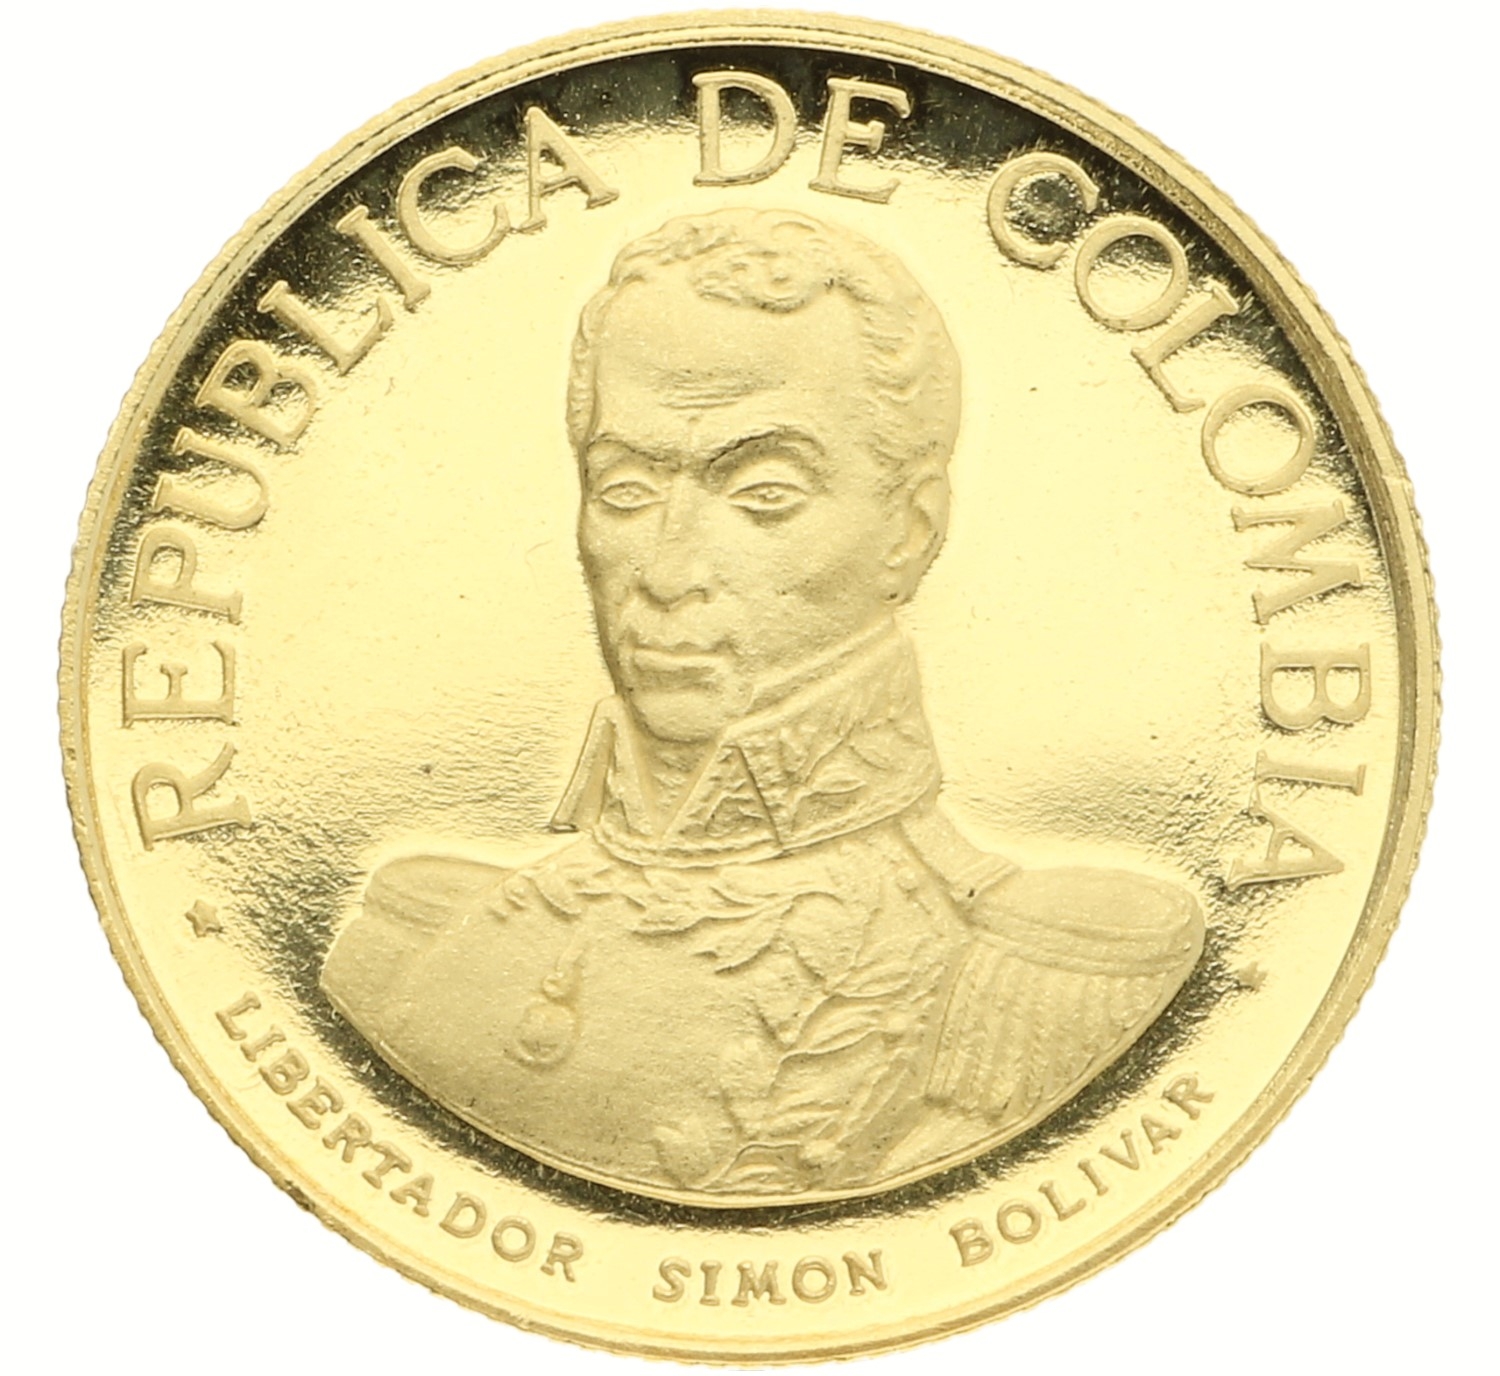 100 Pesos - Colombia - 1969